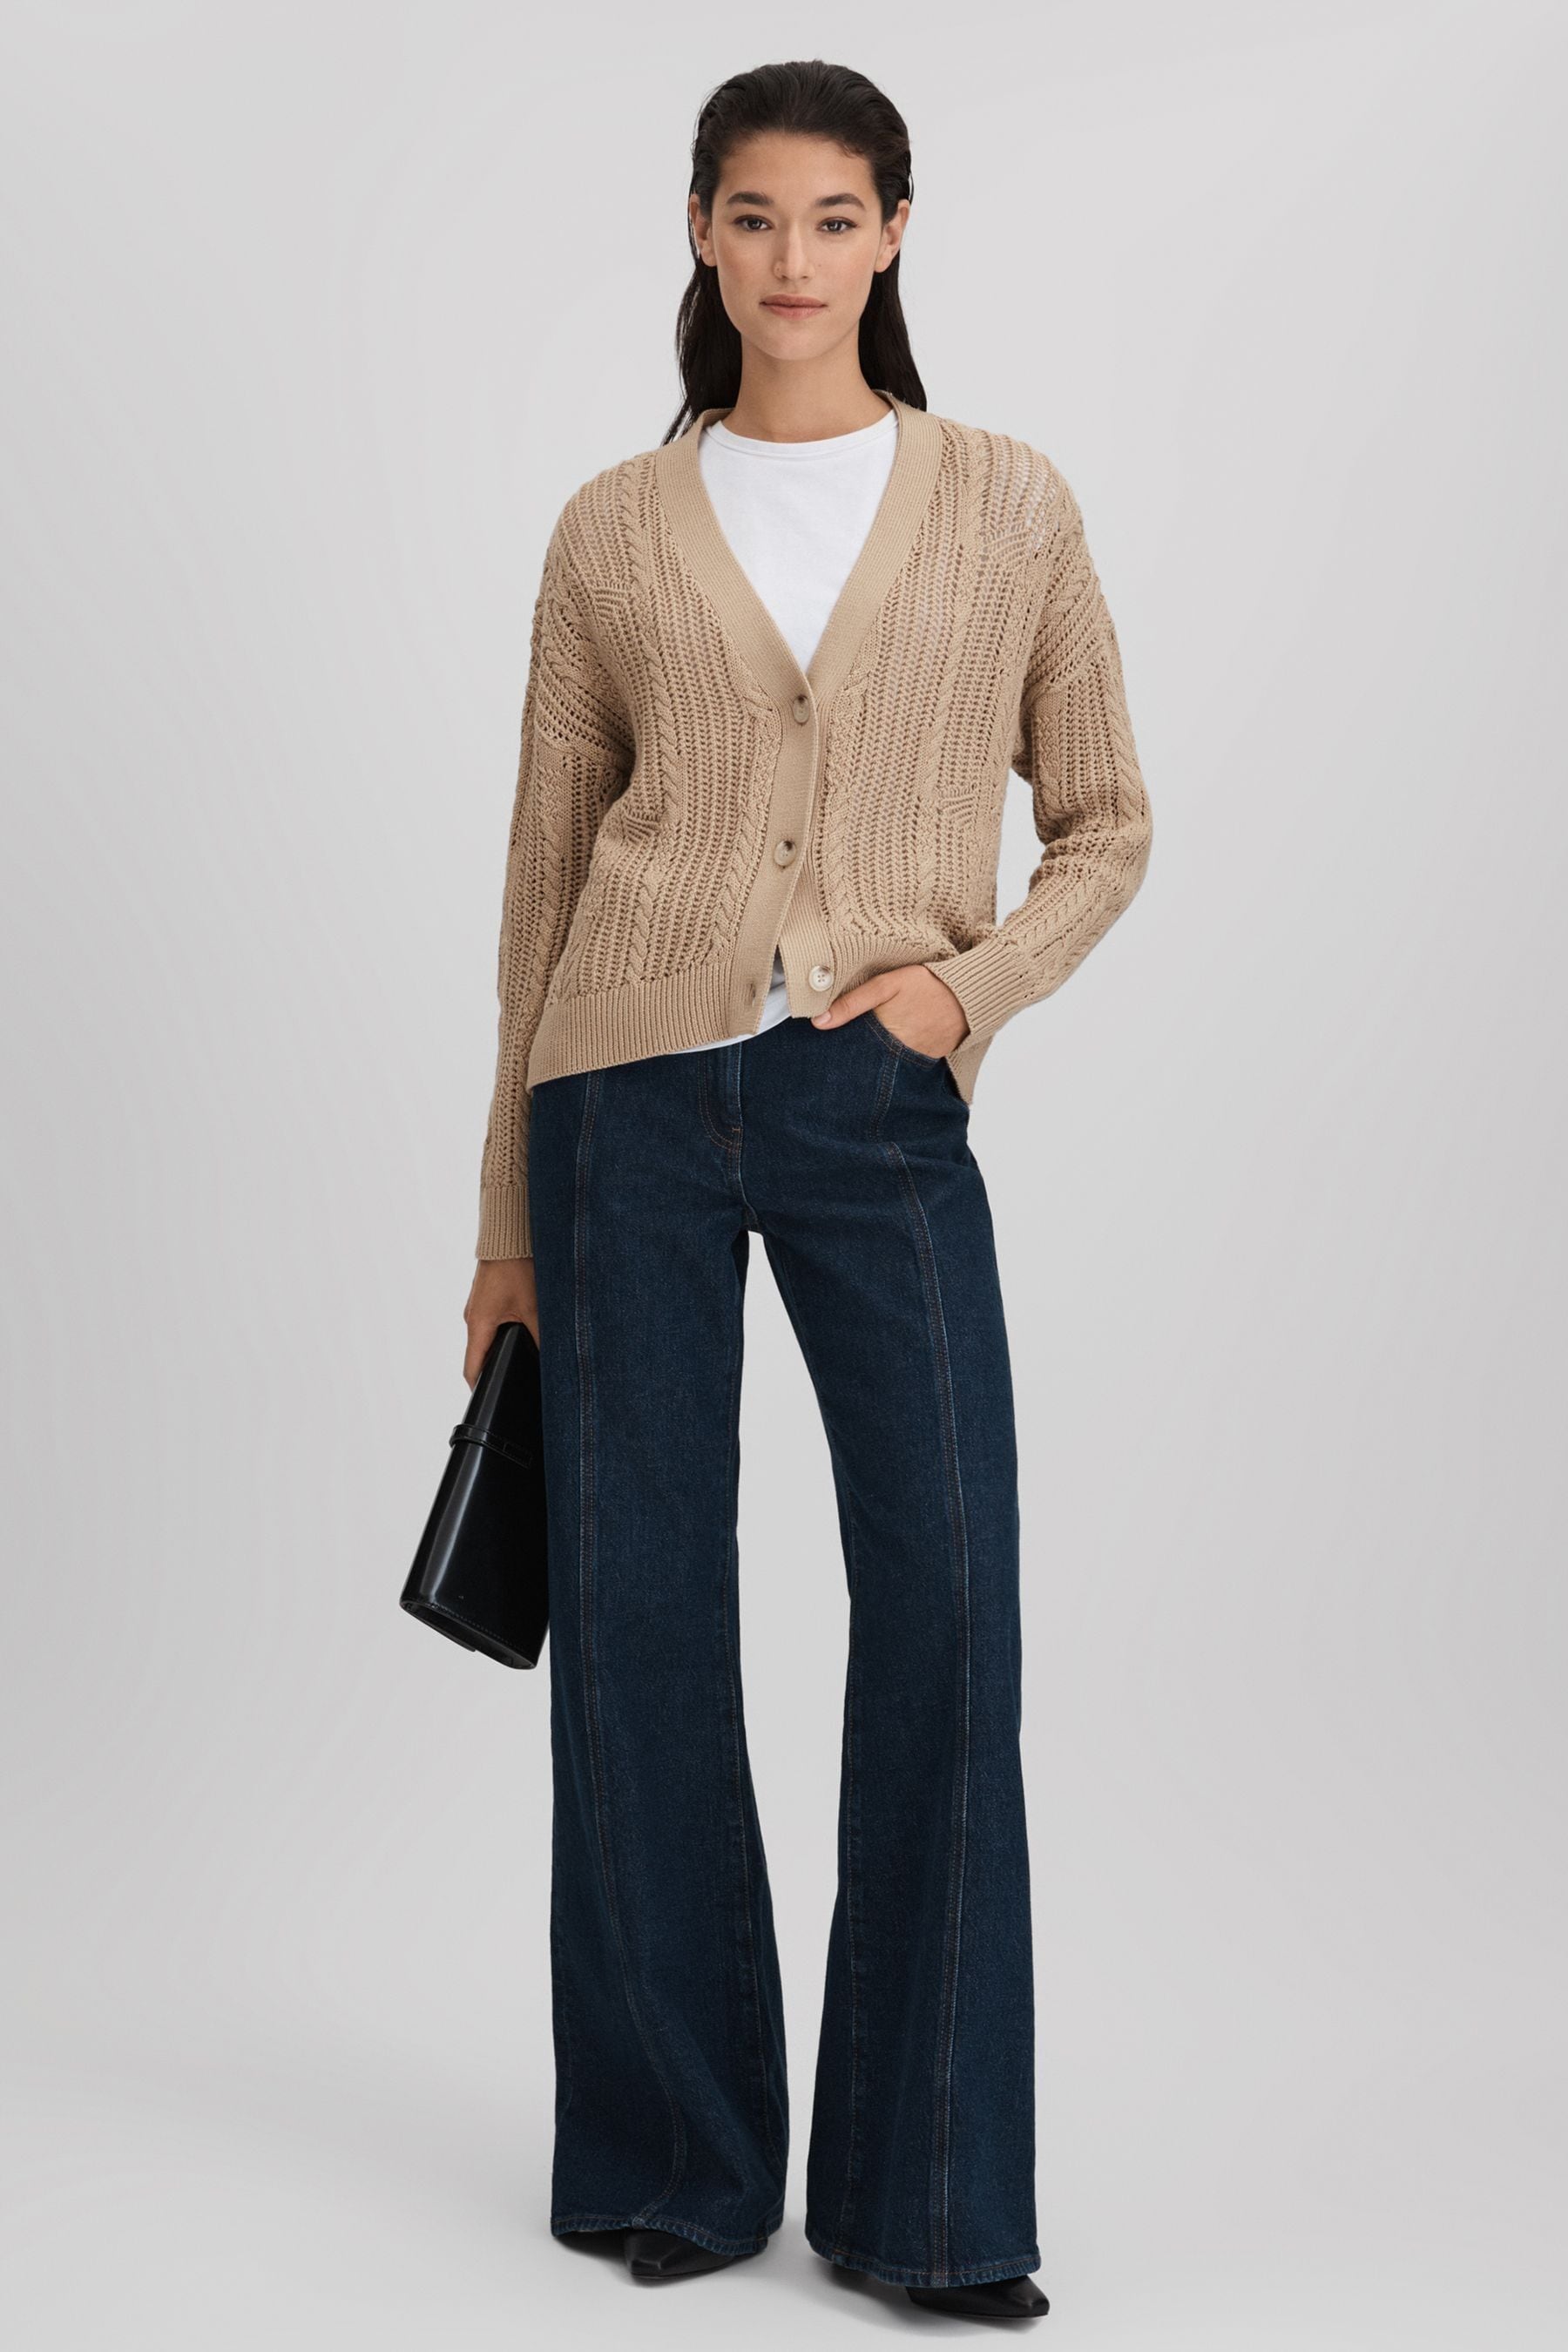 Reiss Tiffany - Neutral Cotton Blend Open Stitch Cardigan, M